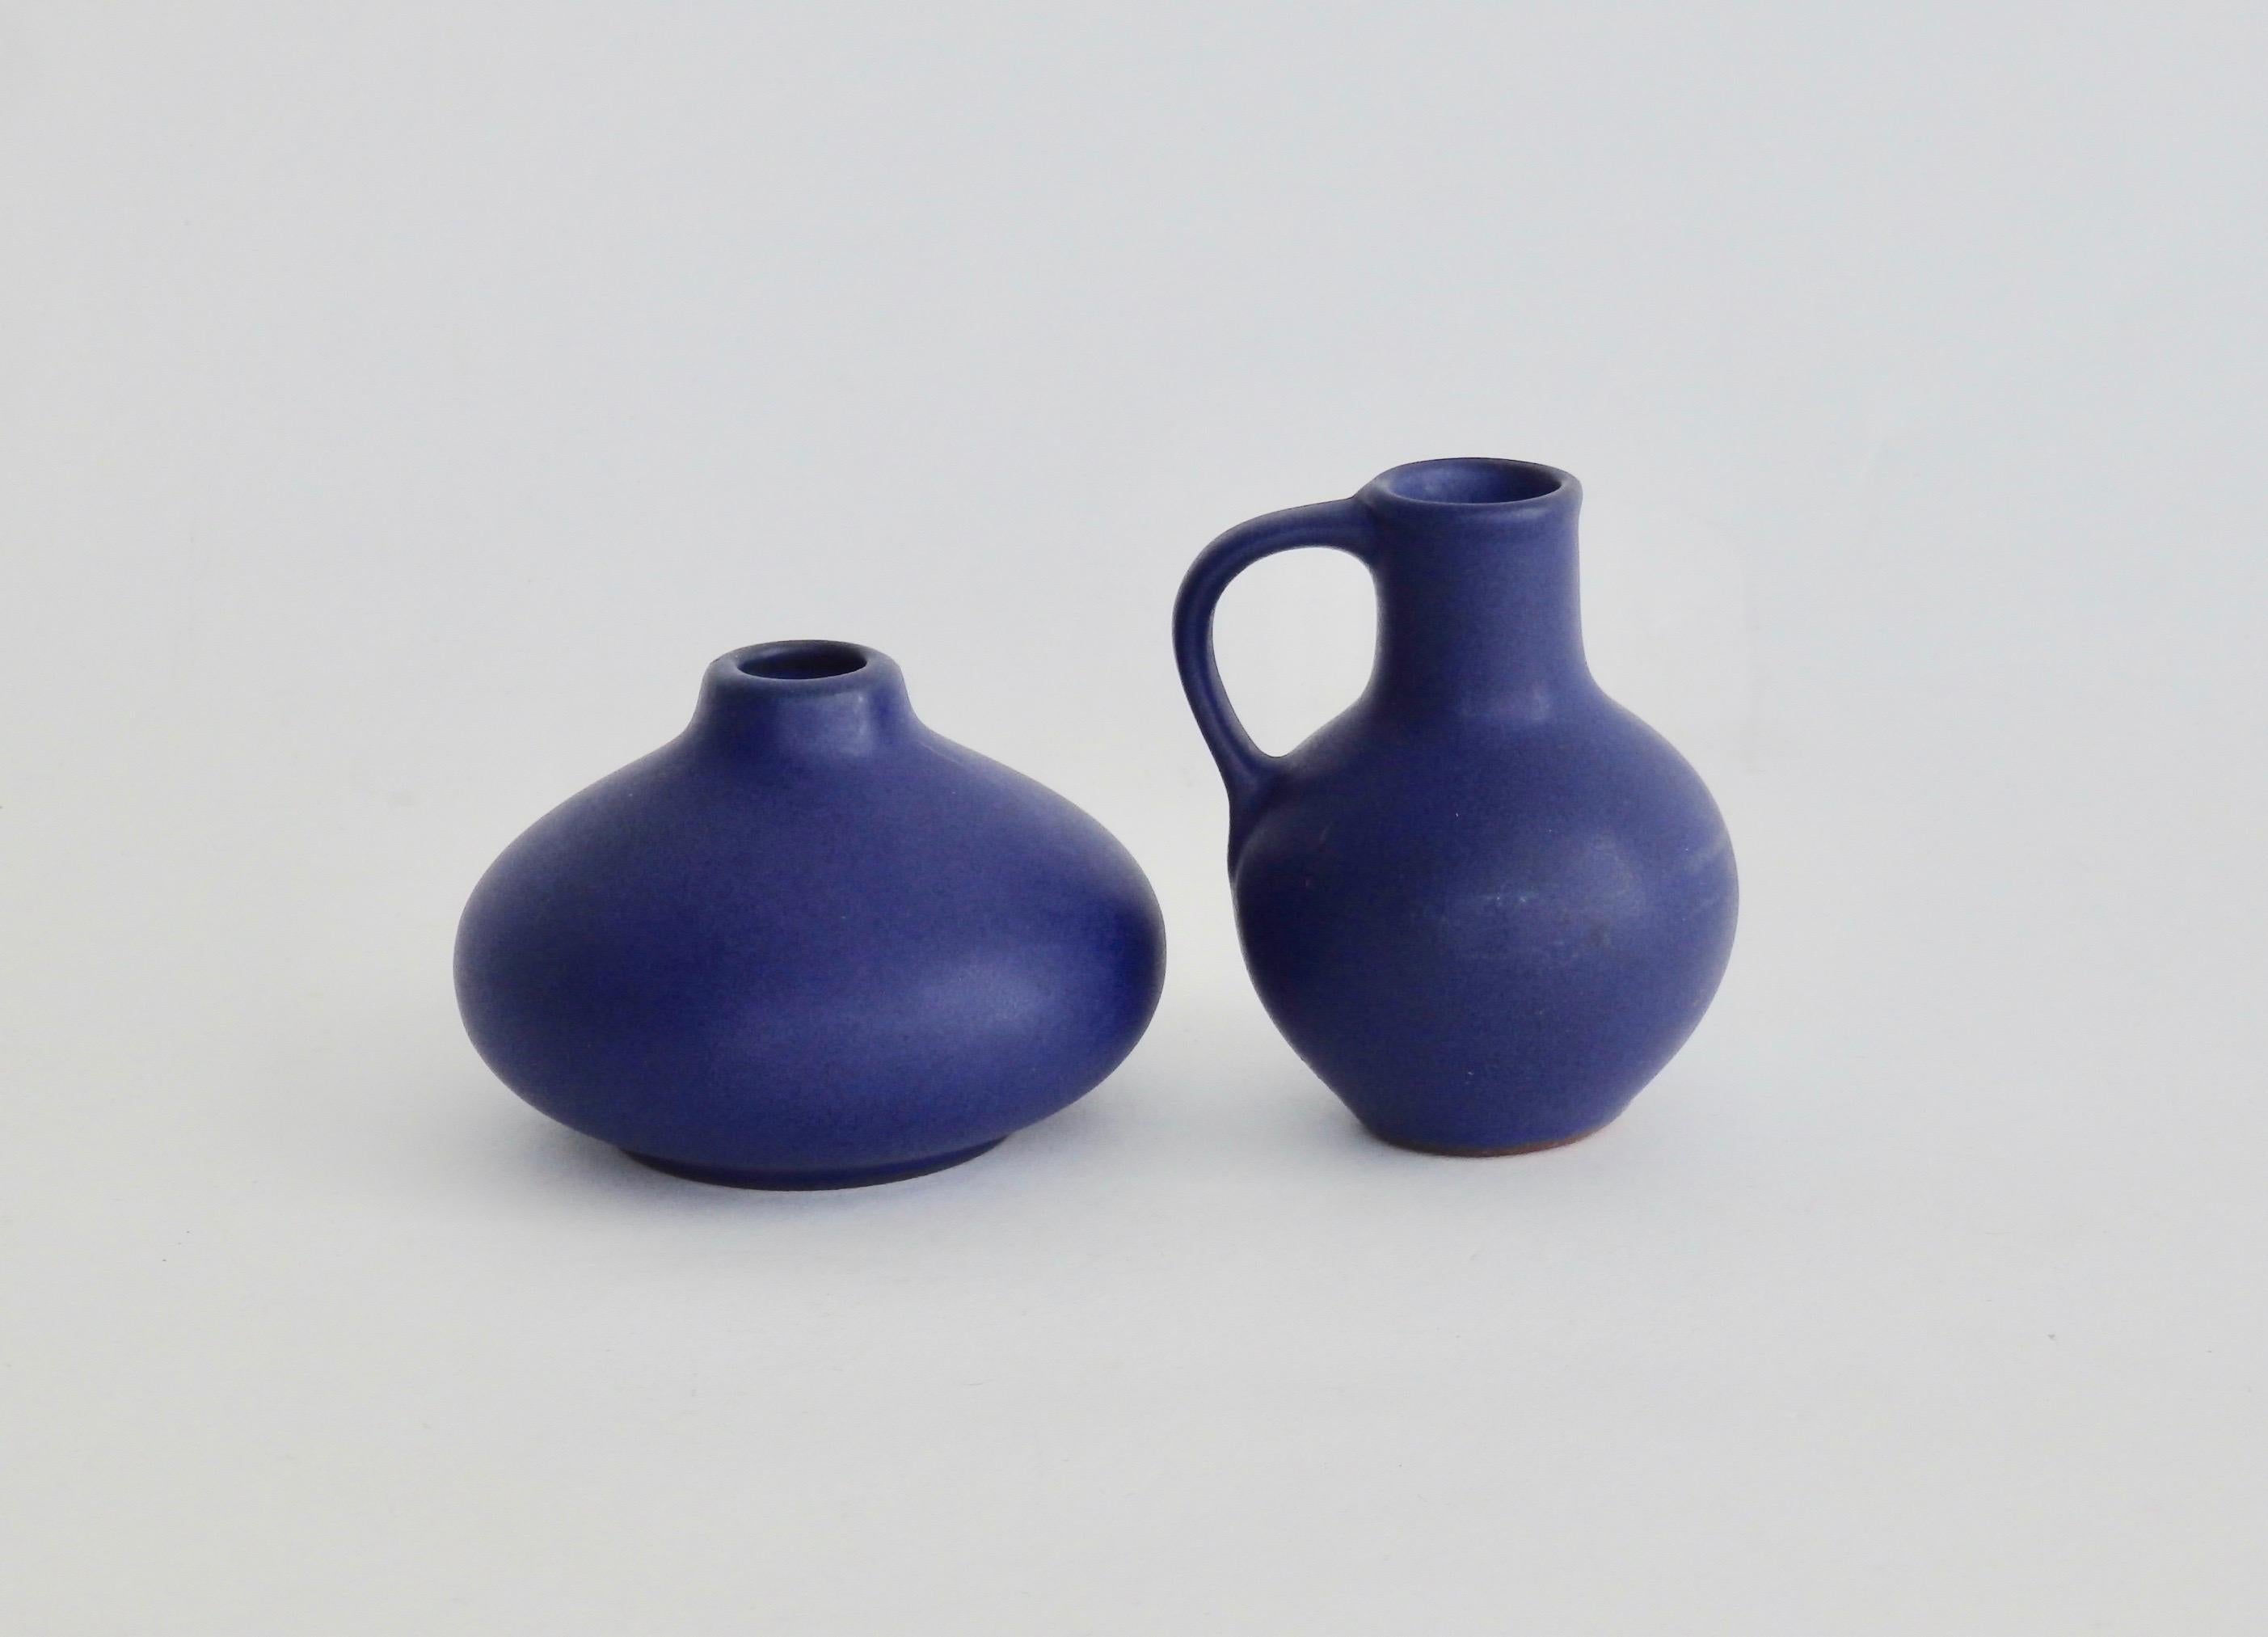 Pair of diminutive matte cobalt blue West German Pottery vessels (Numbers 819 & 806) by Marschner Kunsttopferei.
no.819 measures 3 7/8